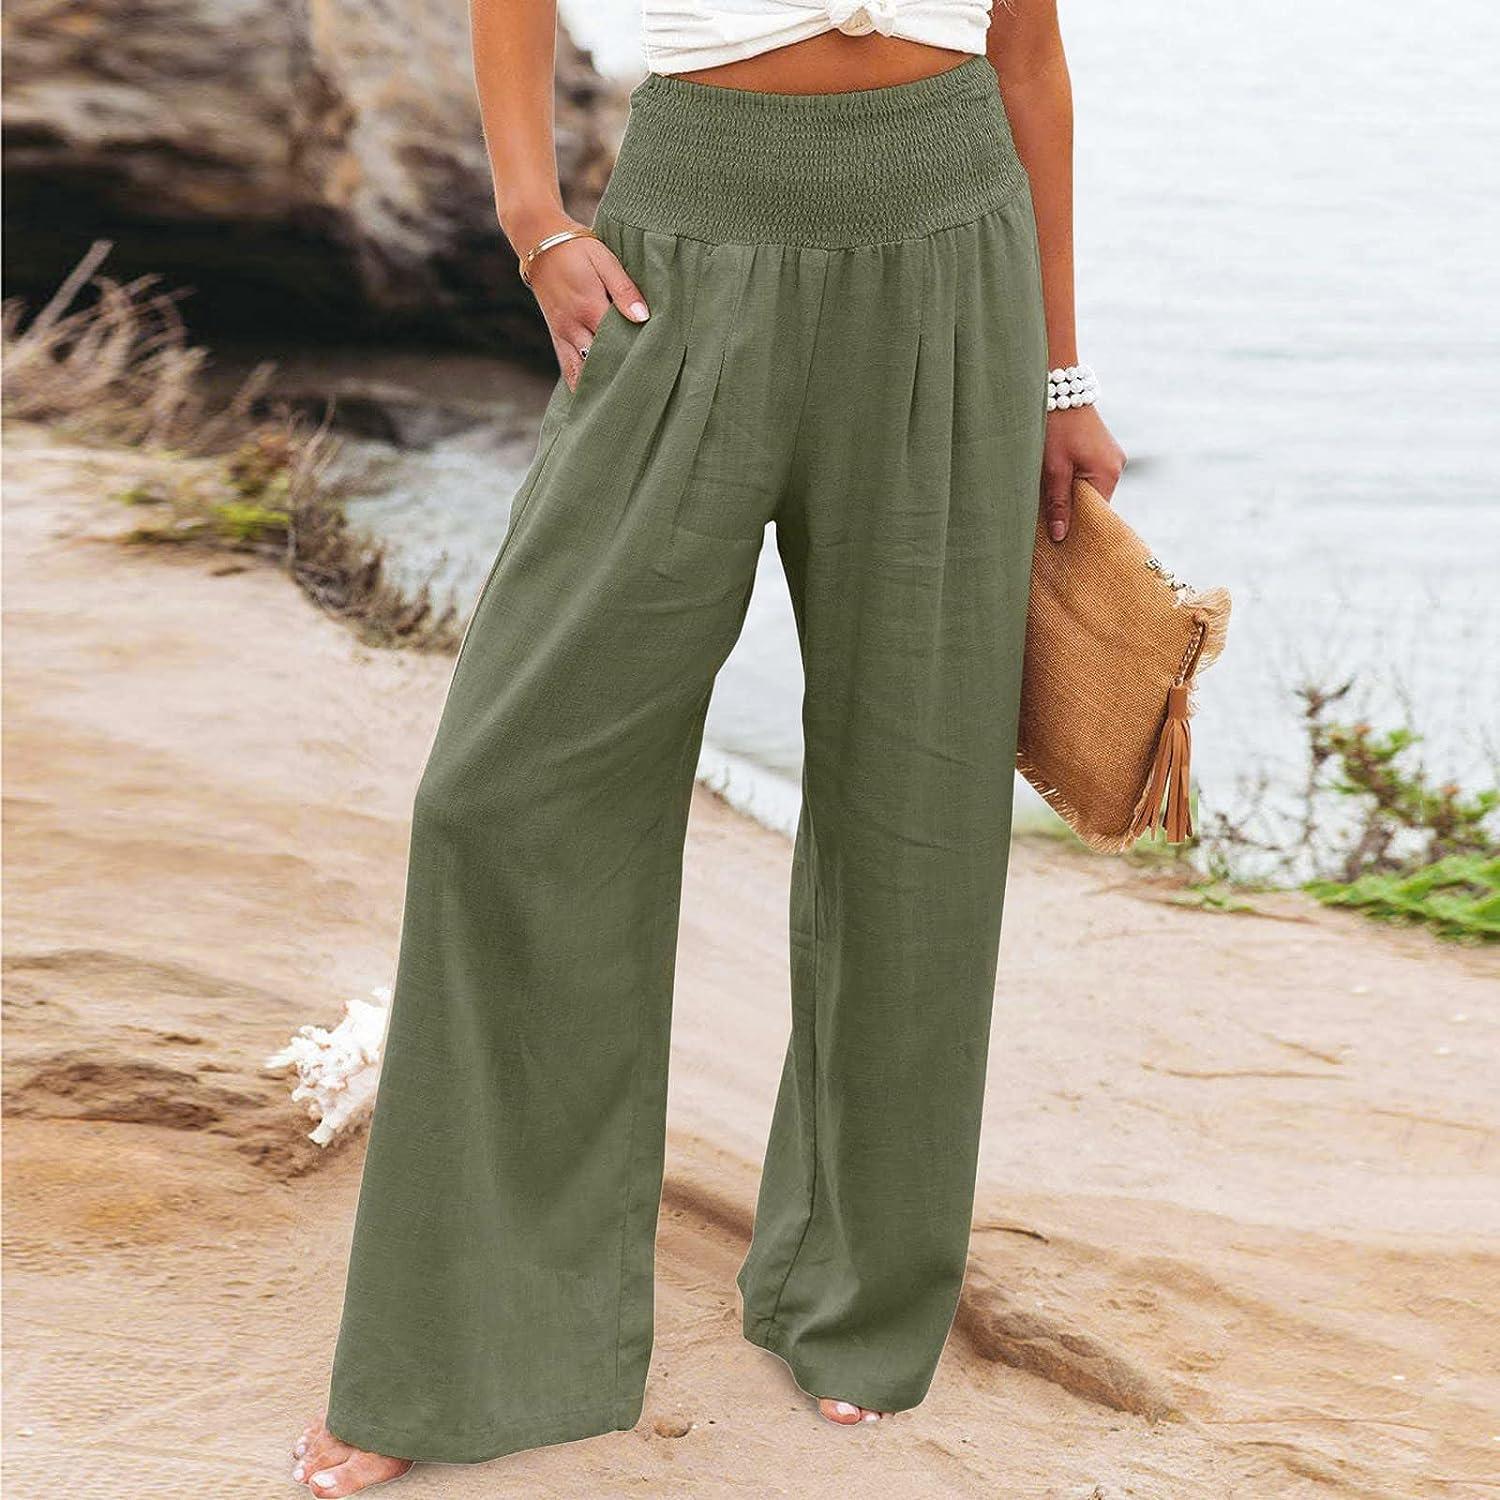 RQYYD Reduced Womens Cotton Linen Pants Casual Plus Size Elastic High Waist  Capri Pants Summer Loose Comfy Wide Leg Crop Pants(Army Green,XXL)